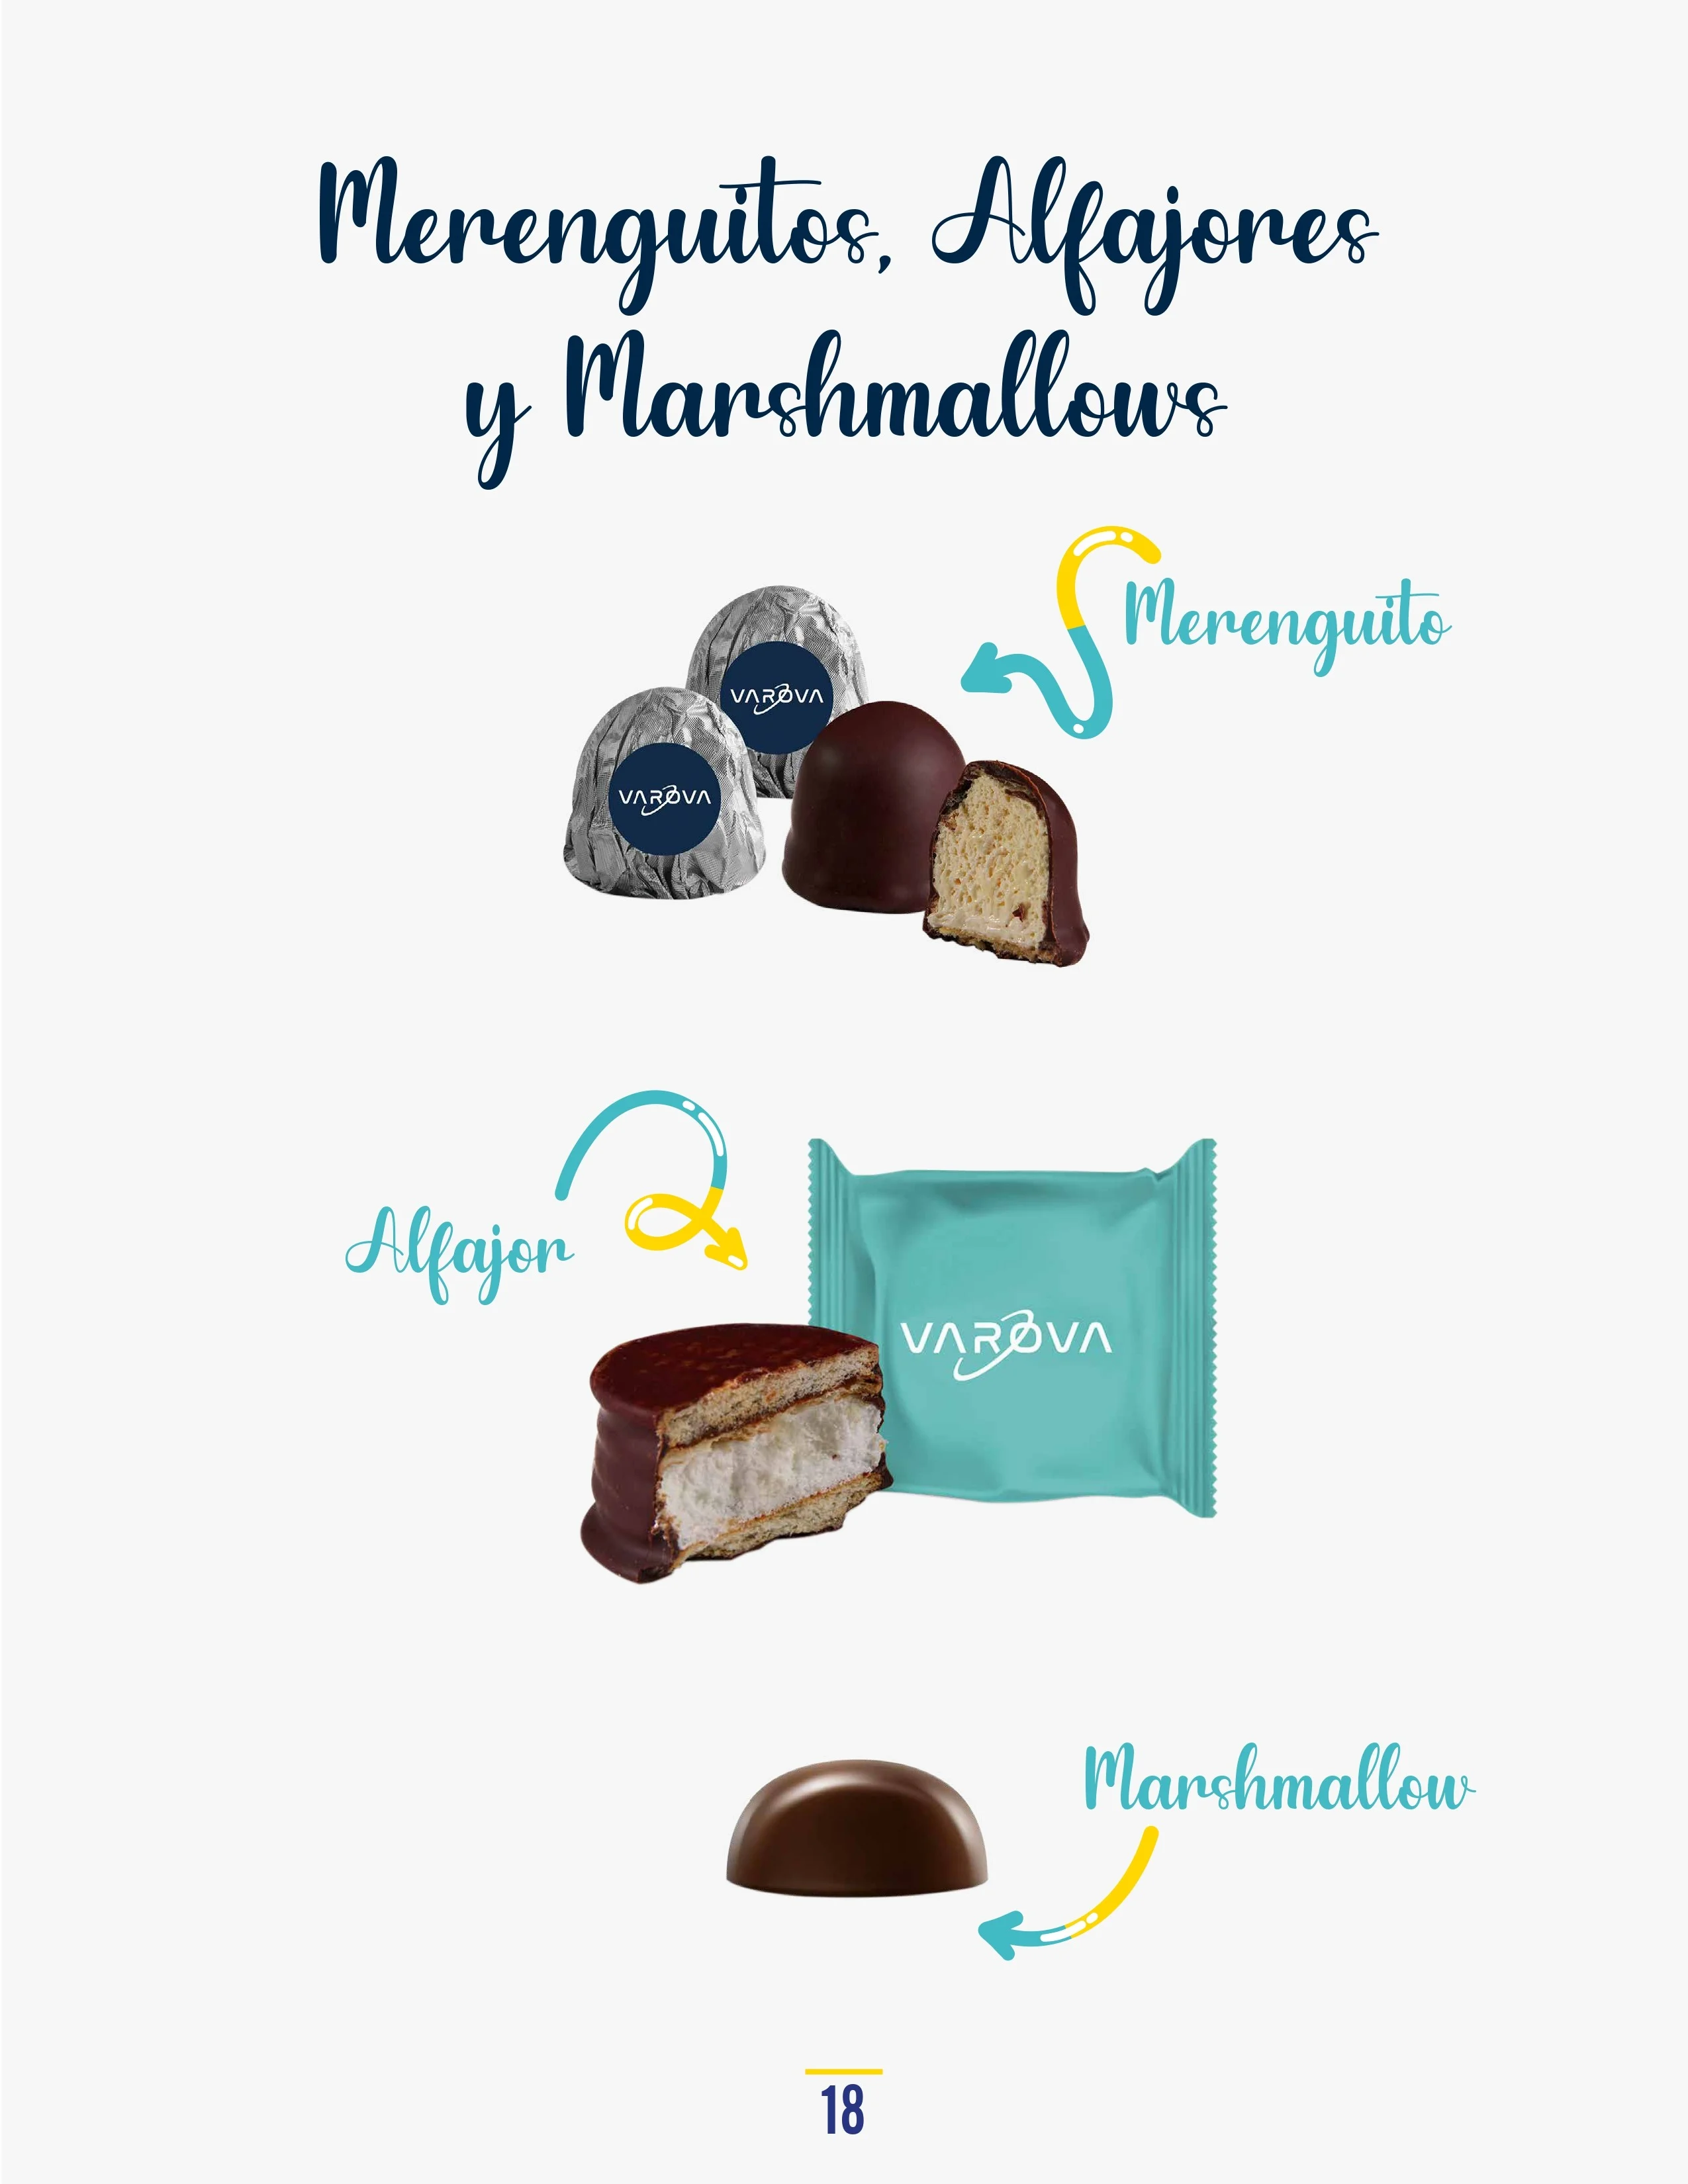 Catálogo de Productos Varova merenguitos alfafores marshmallows personalizados corporativos